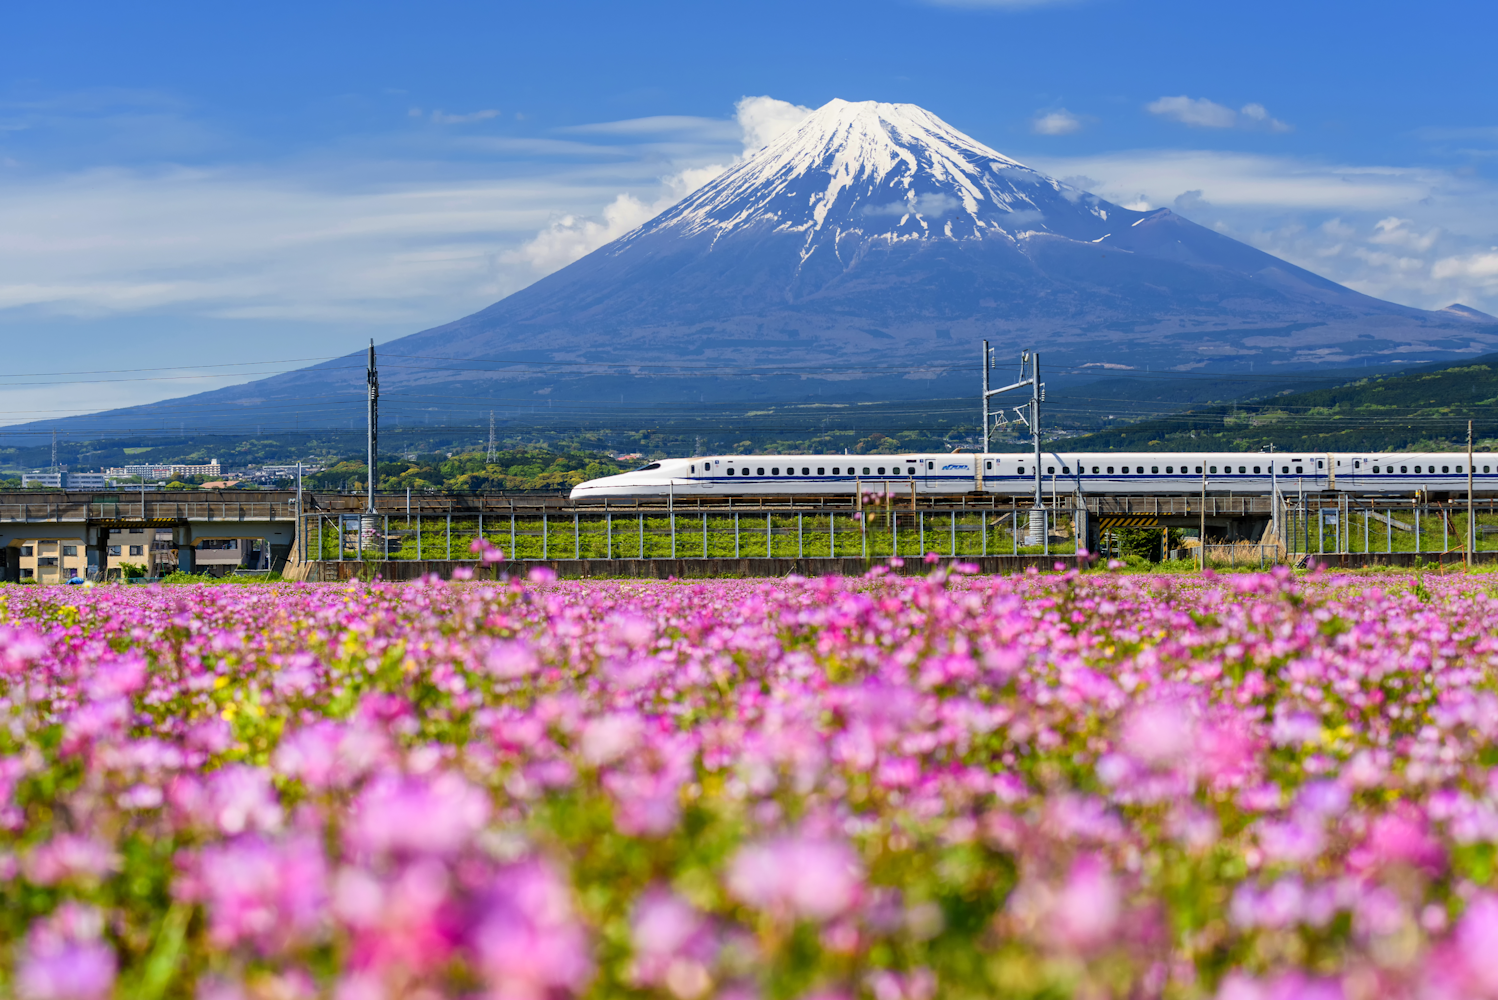 JR Bullet train running pass through Mount Fuji